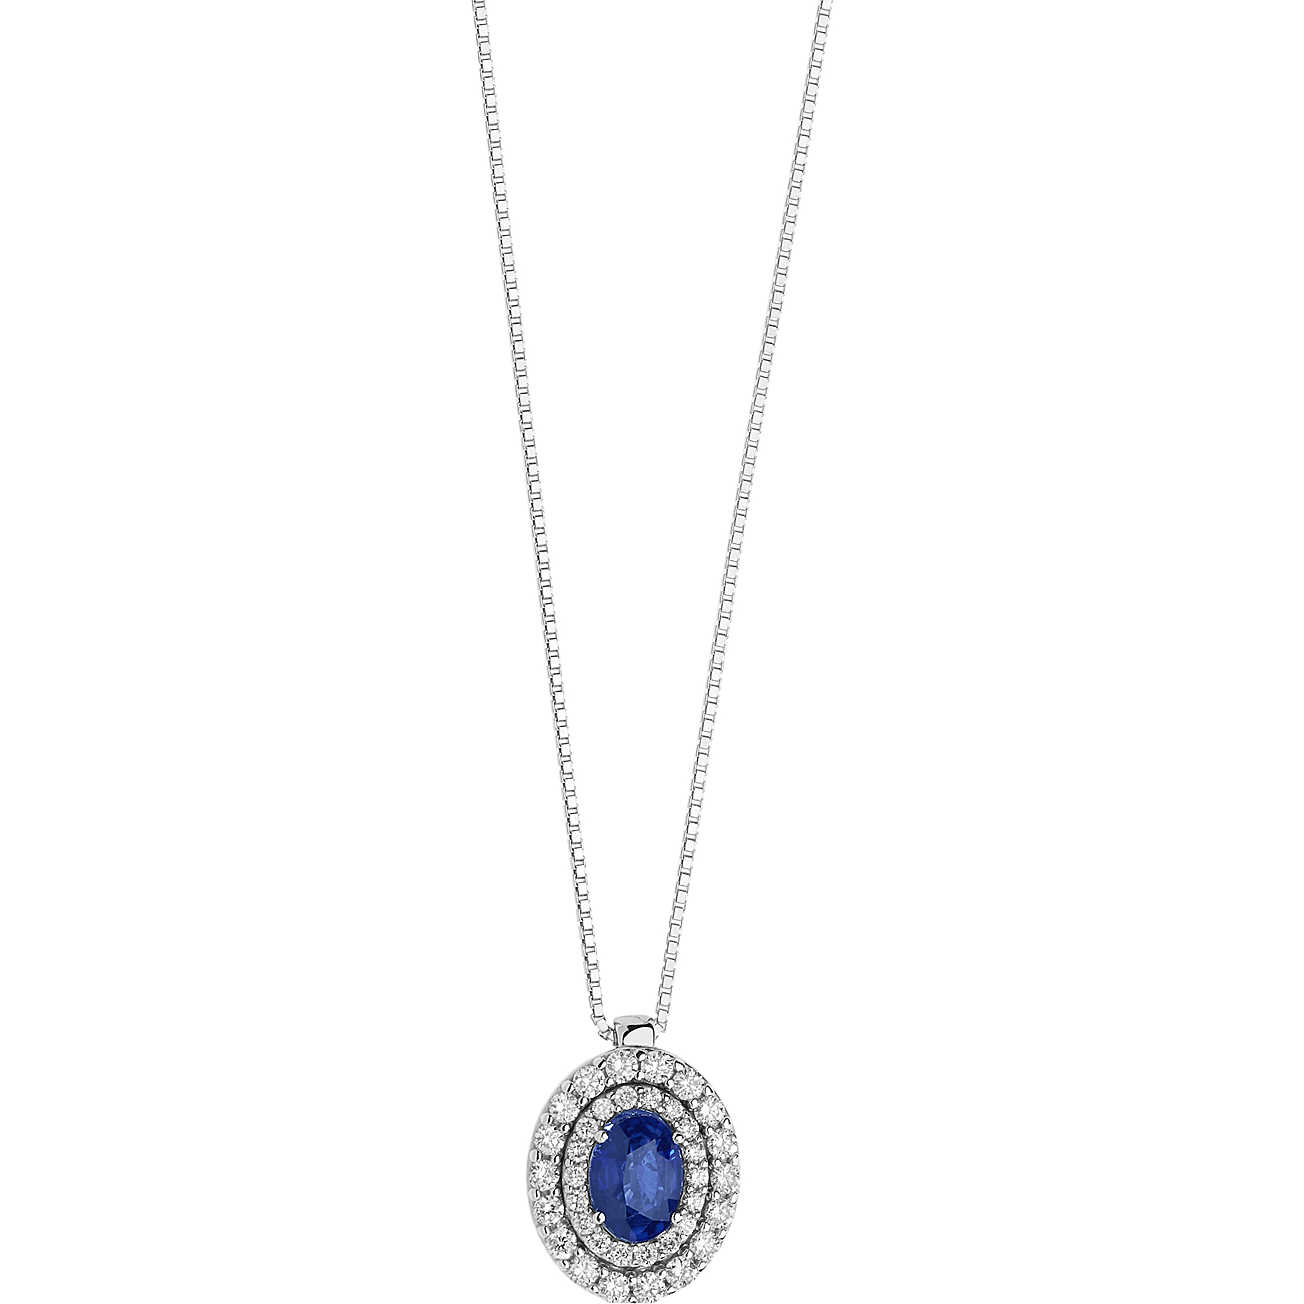 Orion GLB 1474 Women’s Jewelry Necklace